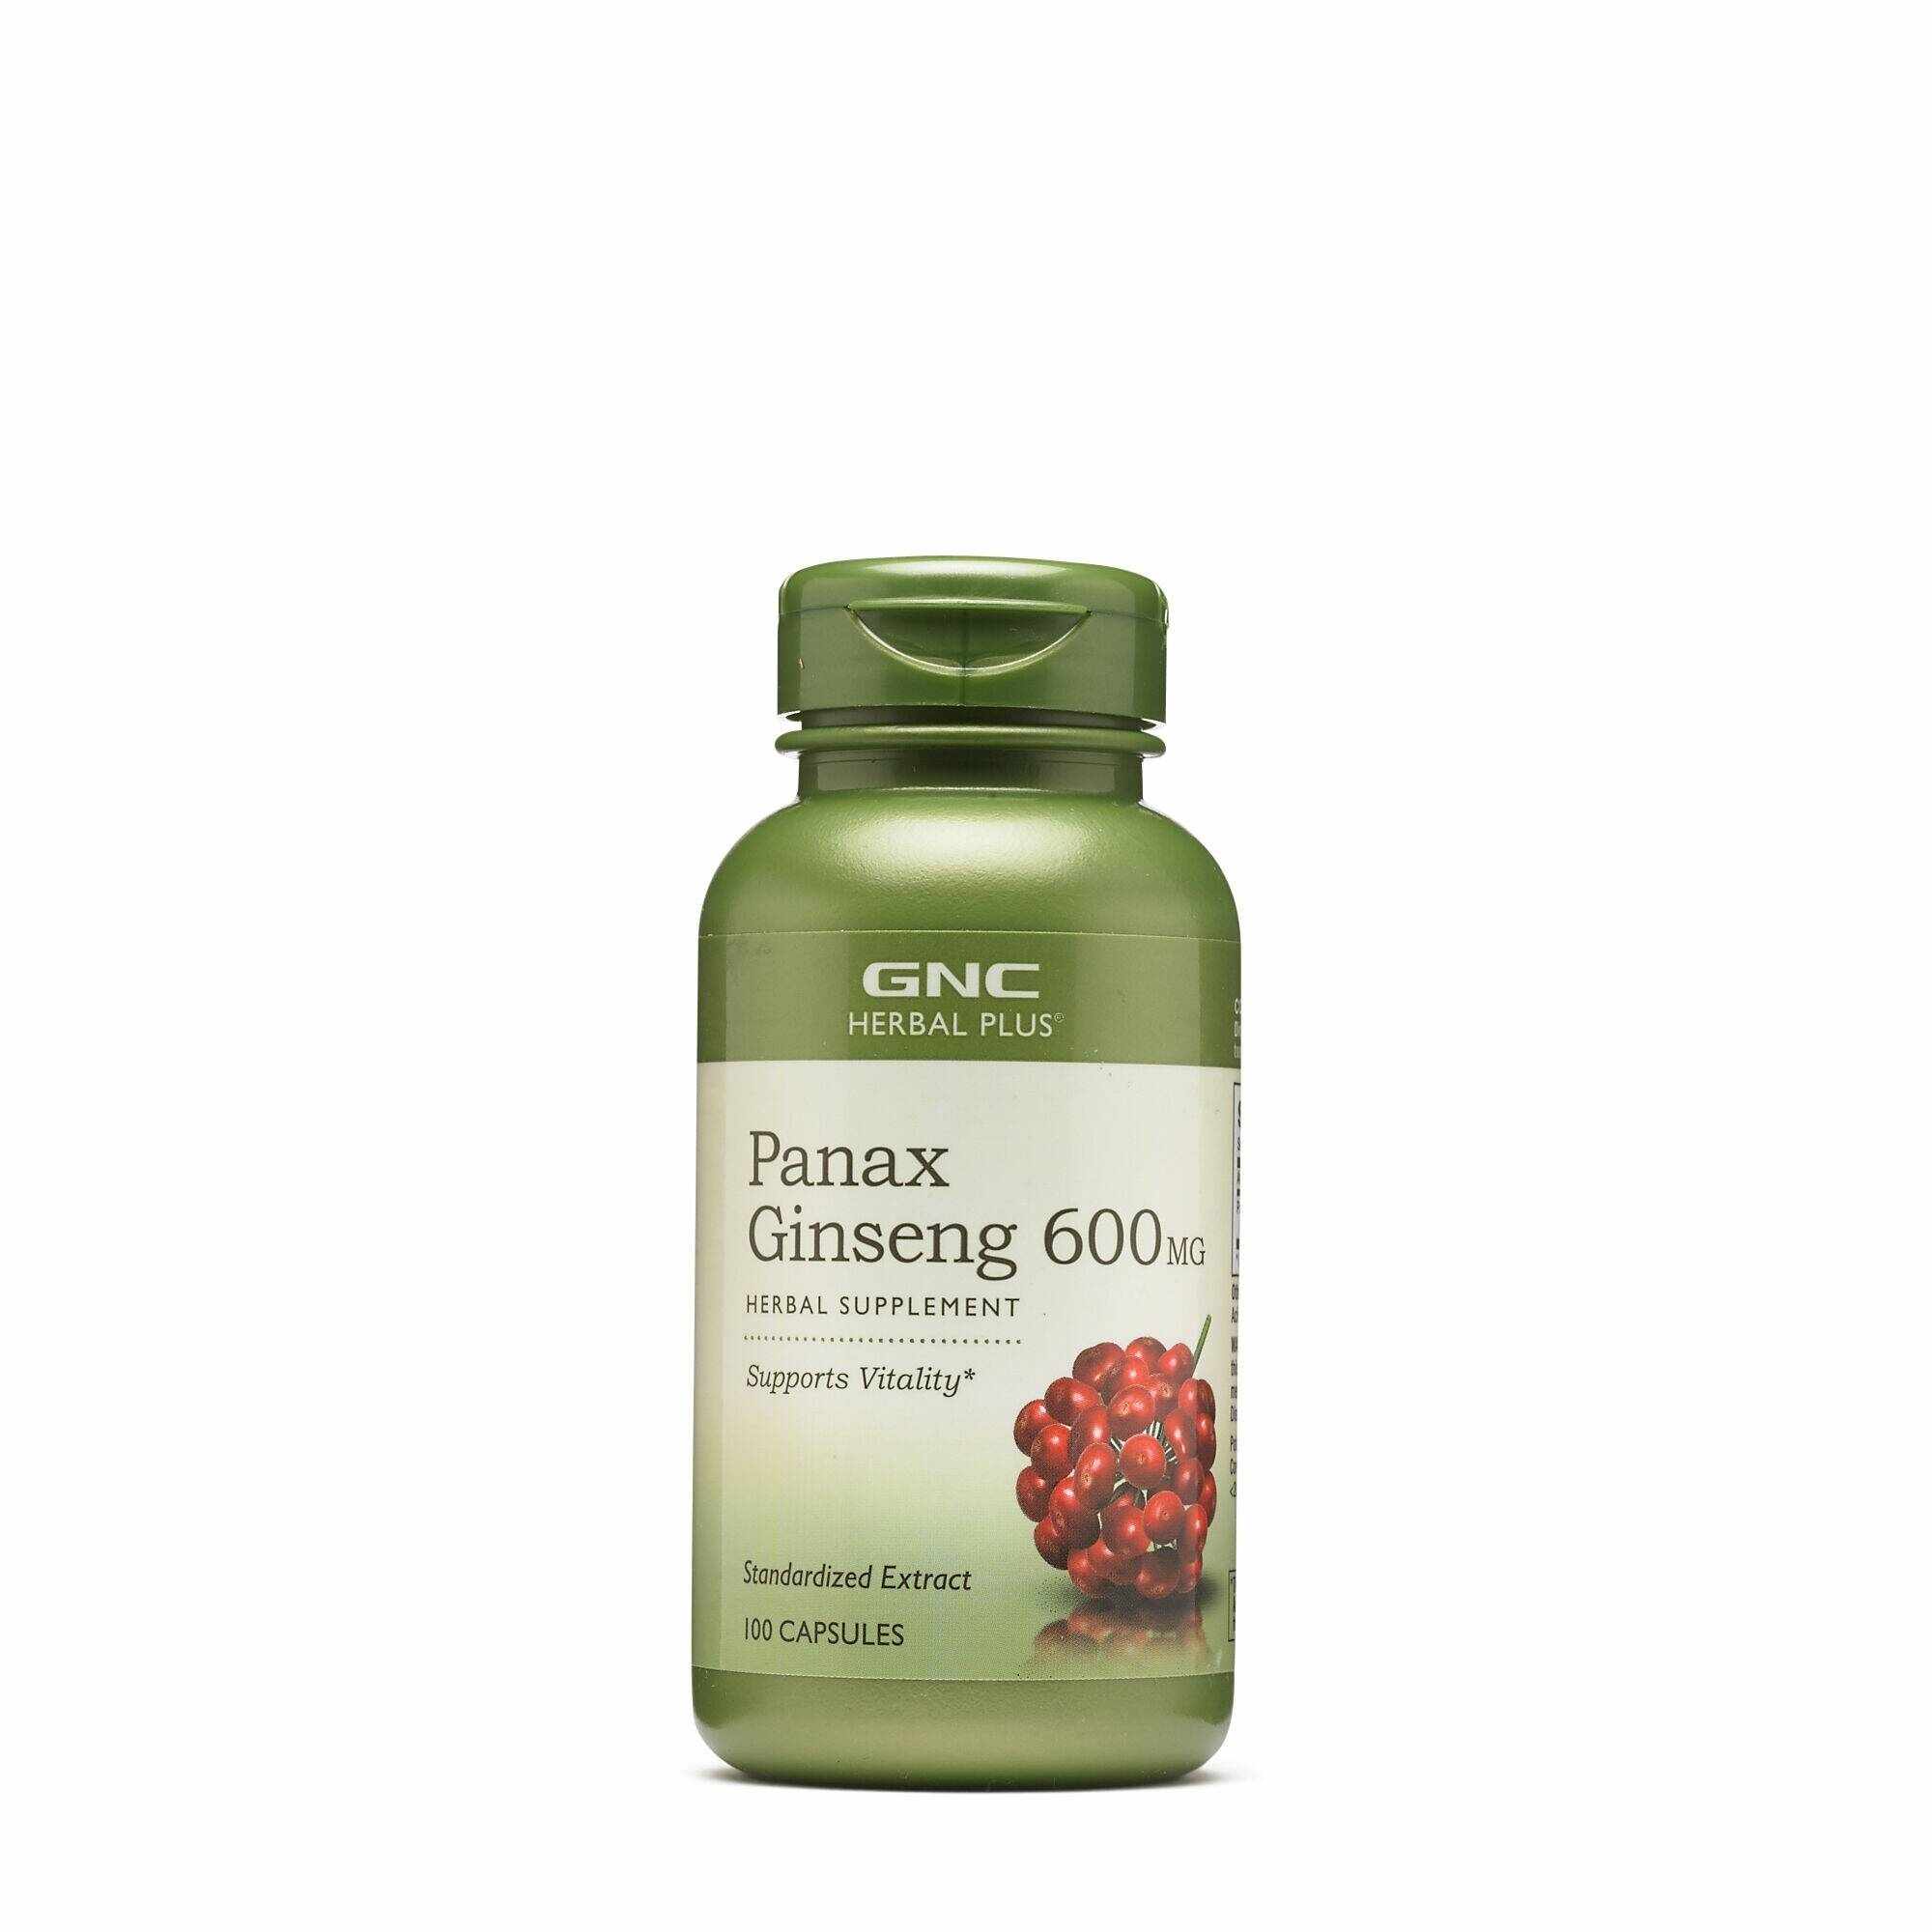 Panax Ginseng 600mg, extract standardizat de ginseng, 100cps - Gnc Herbal Plus